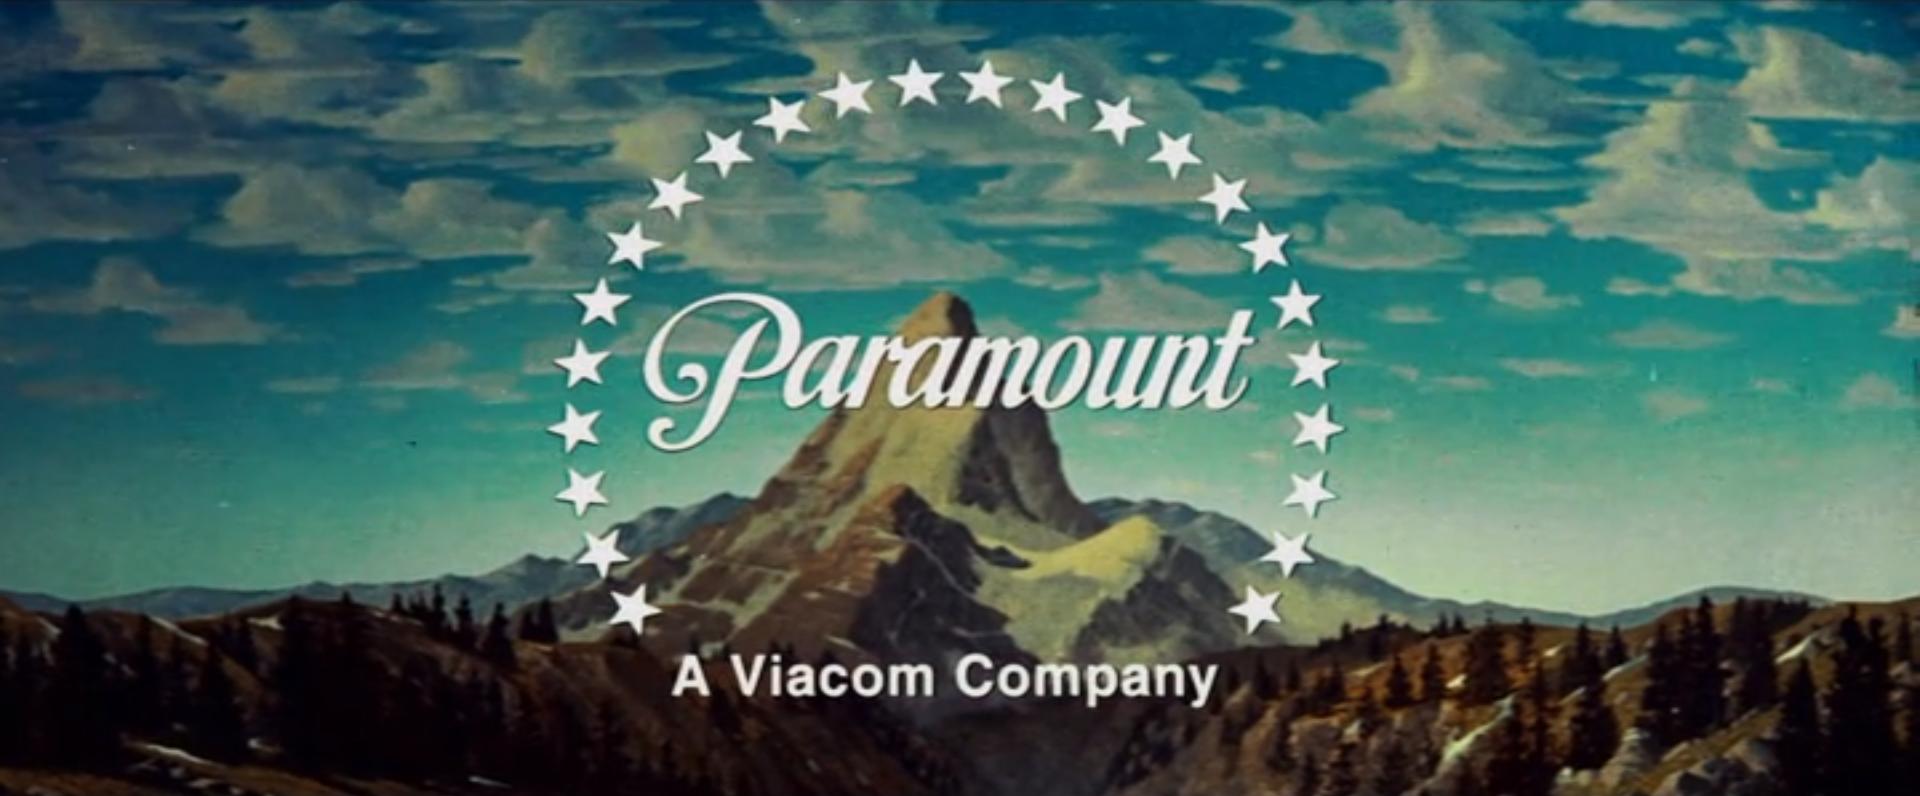 Paramount - Zodiac